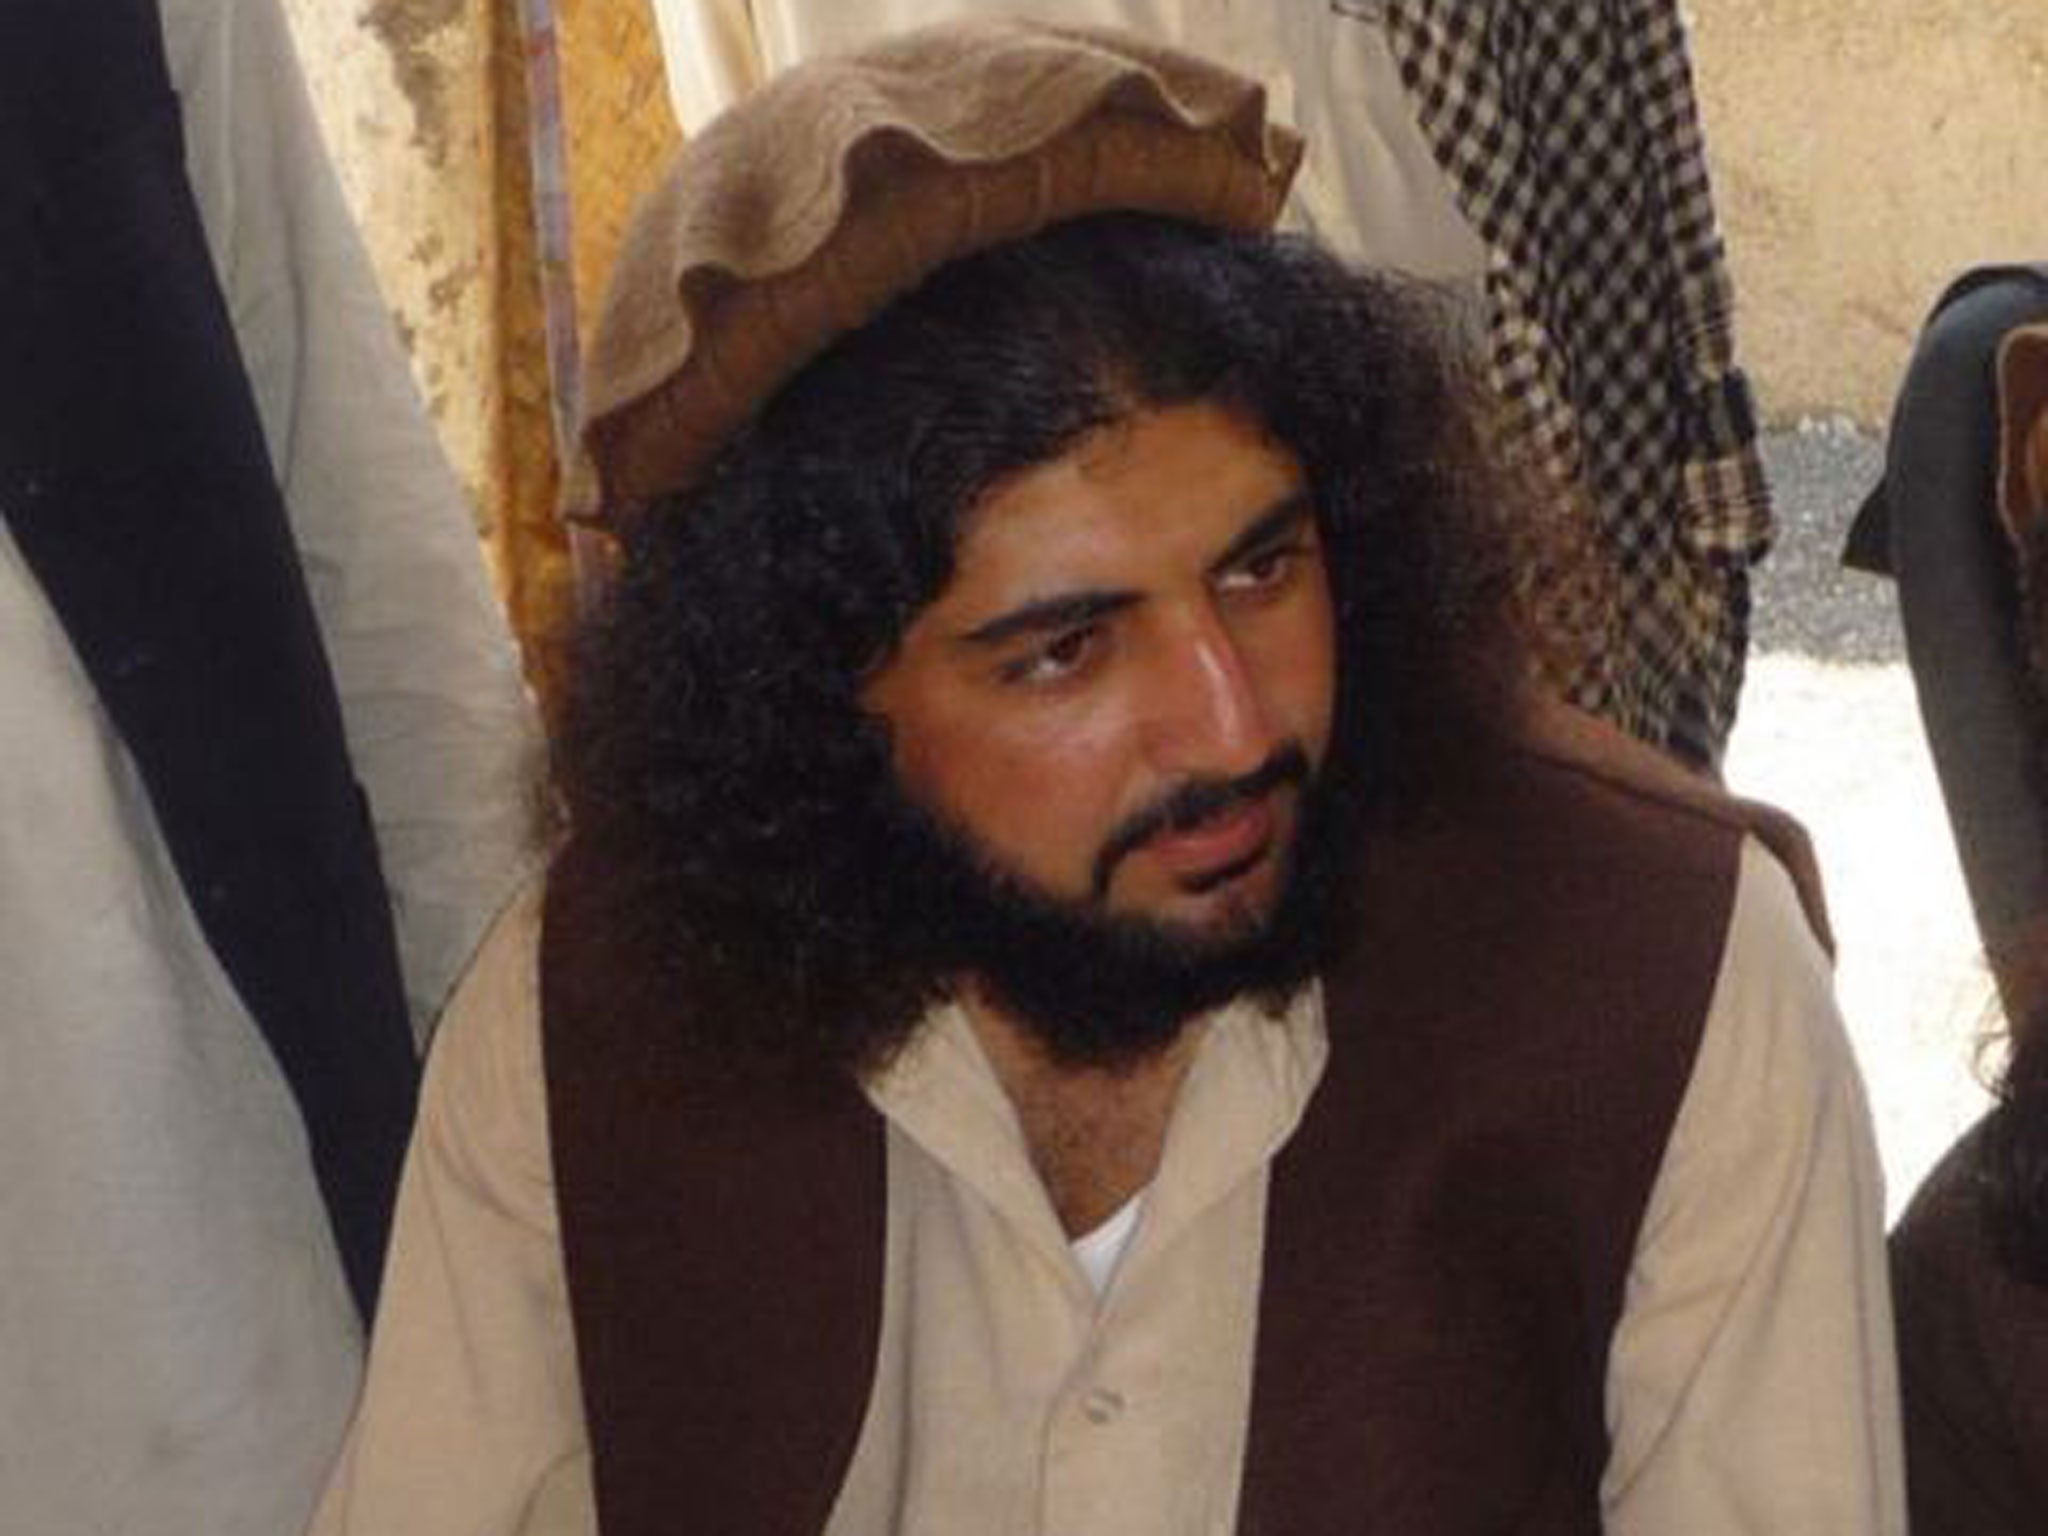 Pakistani Taliban commander Latif Mehsud was captured last weekend